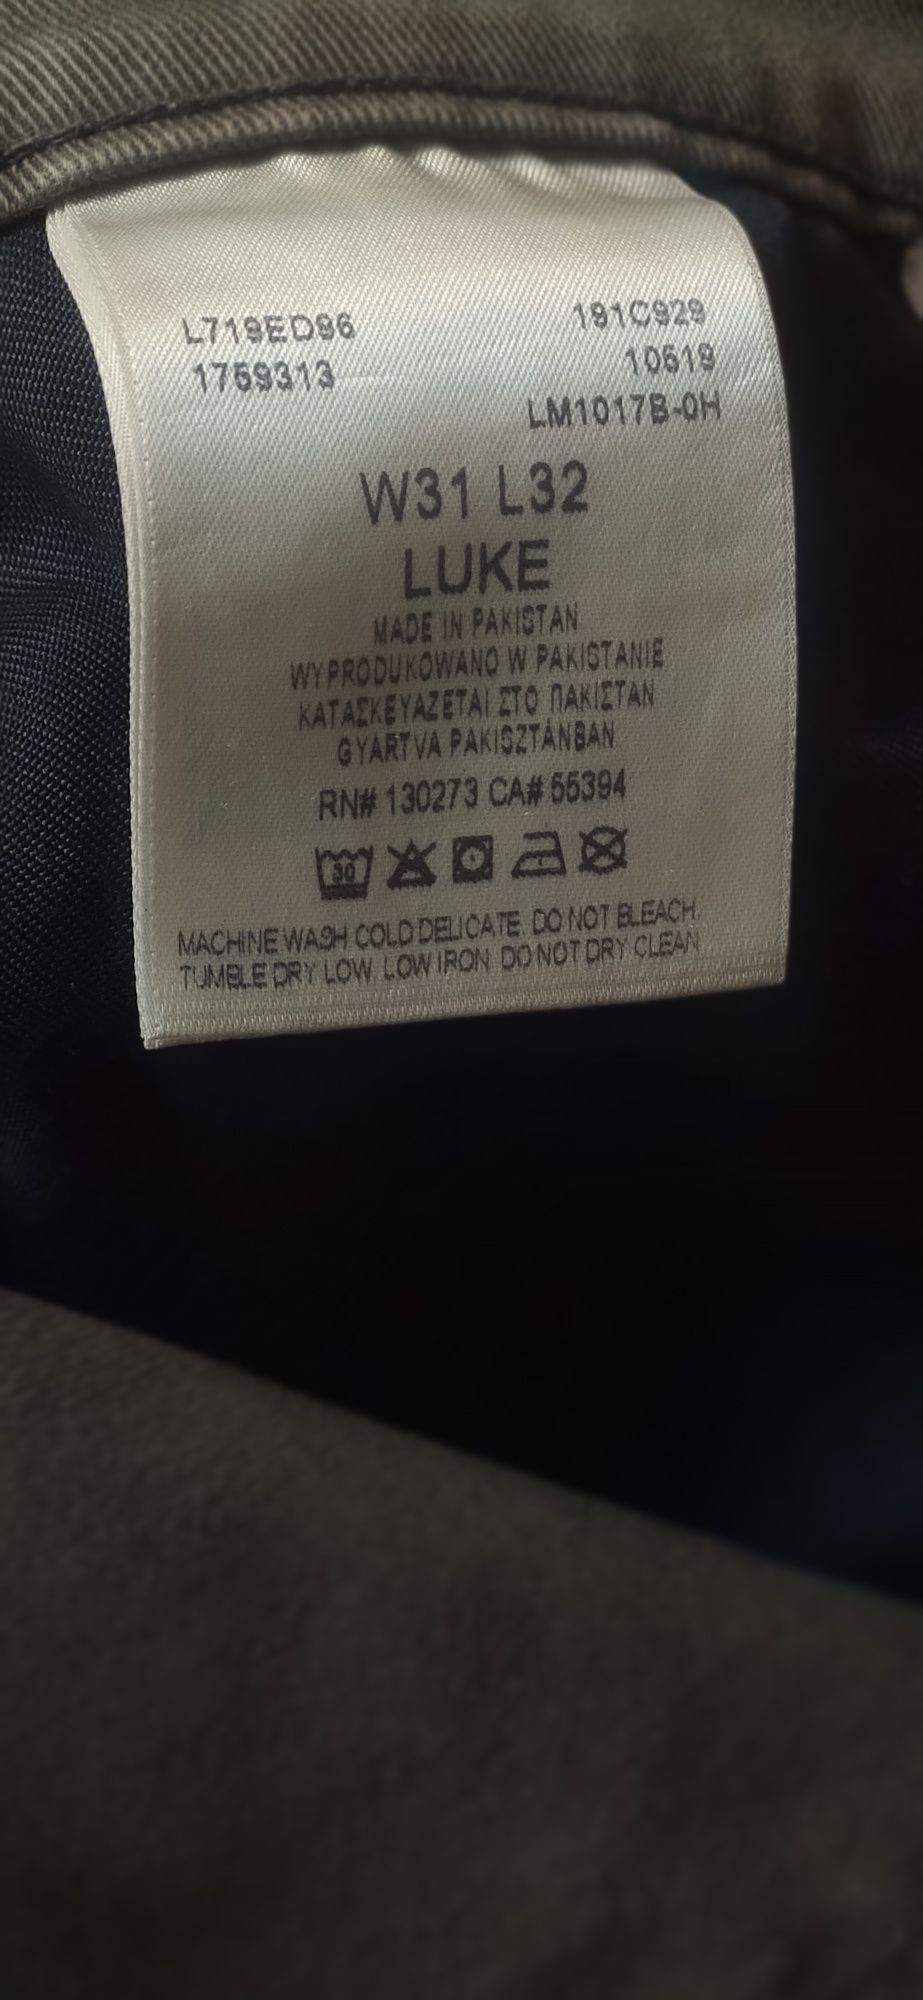 Calças Jeans Lee Luke Olive Green W31 L32